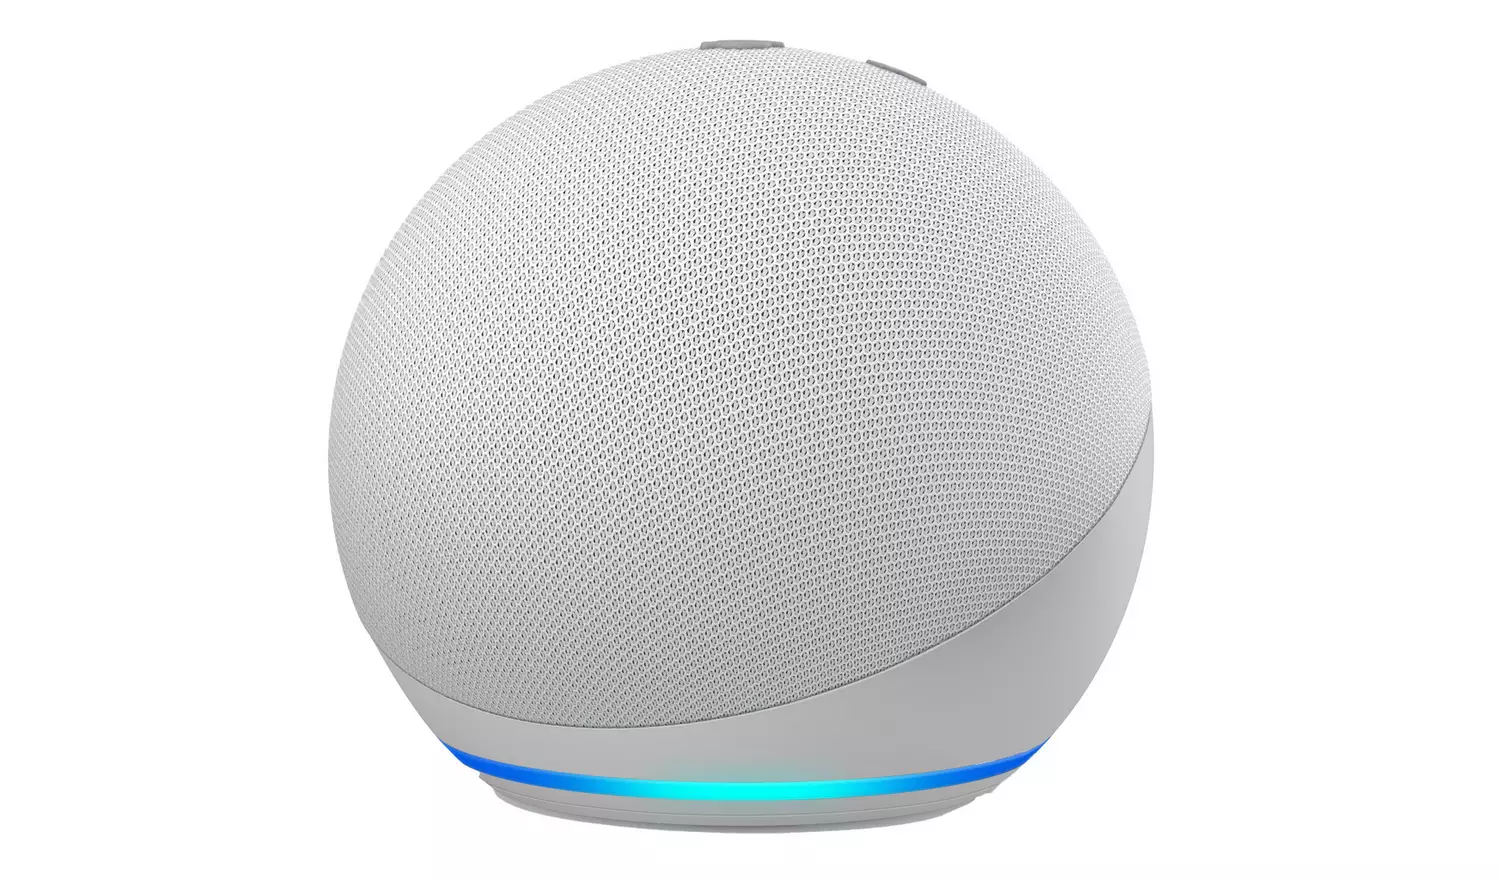 Practical Christmas for mom #1: Echo Dot 4th gen smart speaker with Alexa